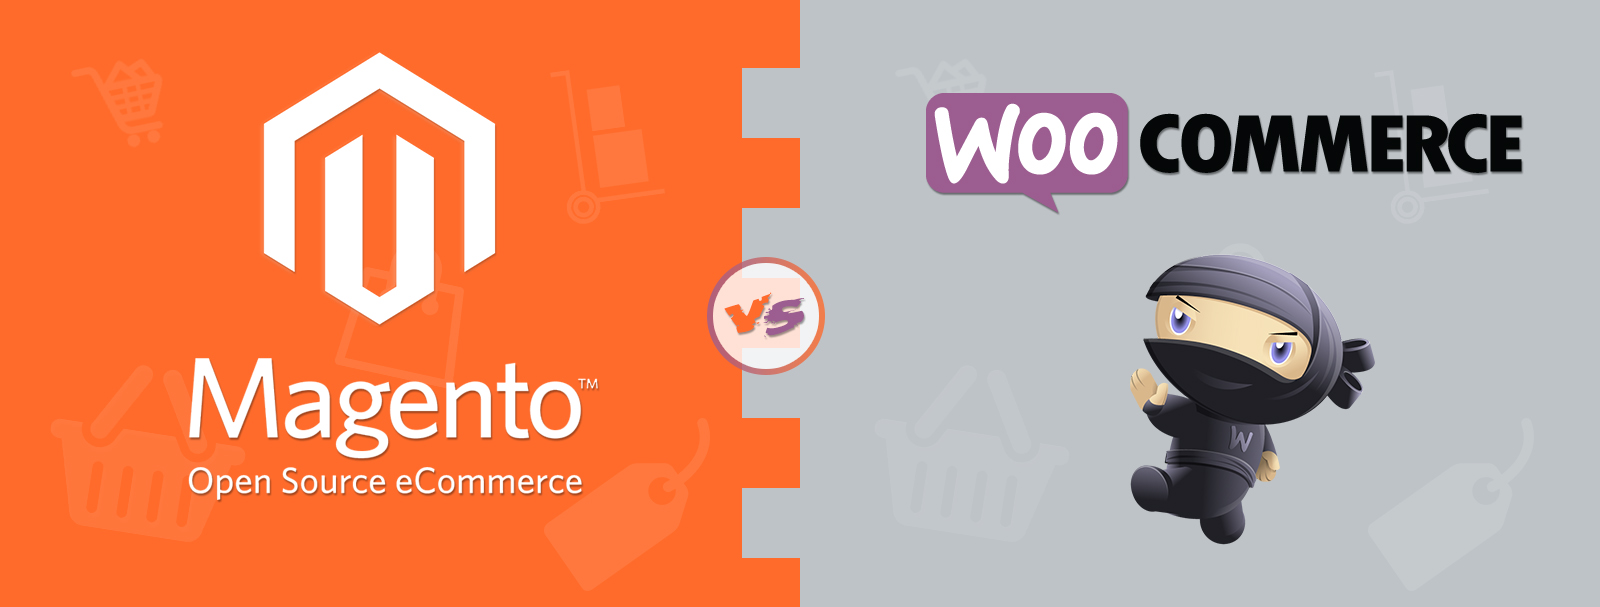 Nandini Ramachandran Magento News: Magneto Vs Woocommerce: which is the best e-commerce platform?